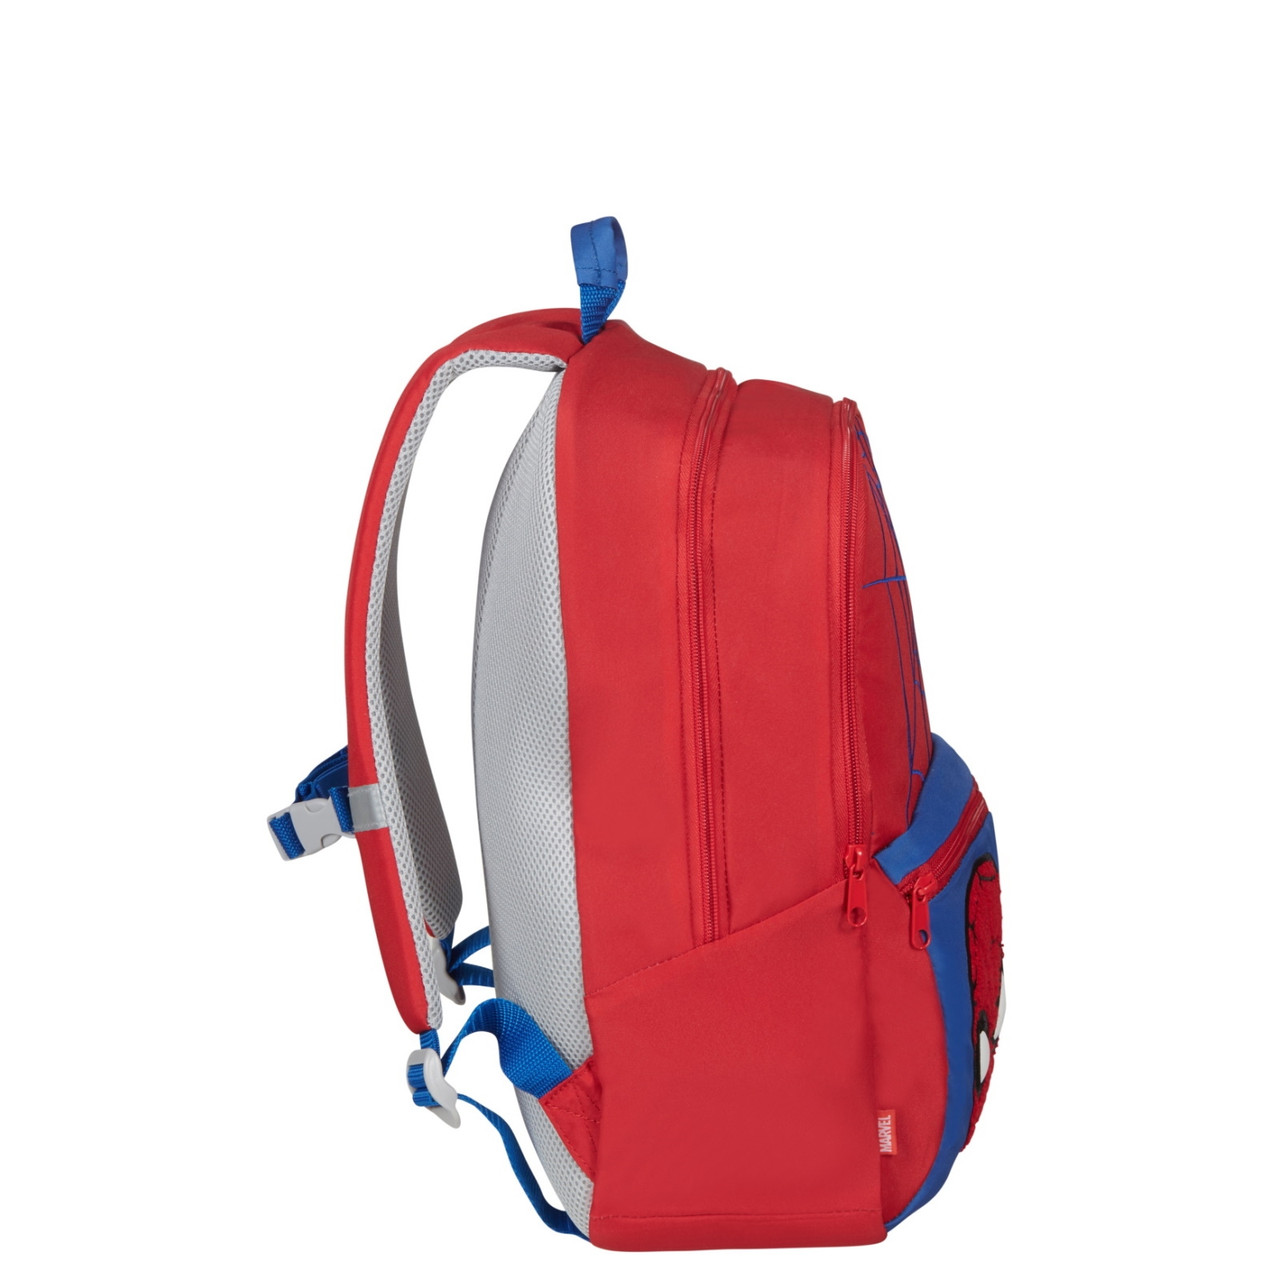 M 2.0 Samsonite Ultimate Marvel Backpack Superstore Luggage at